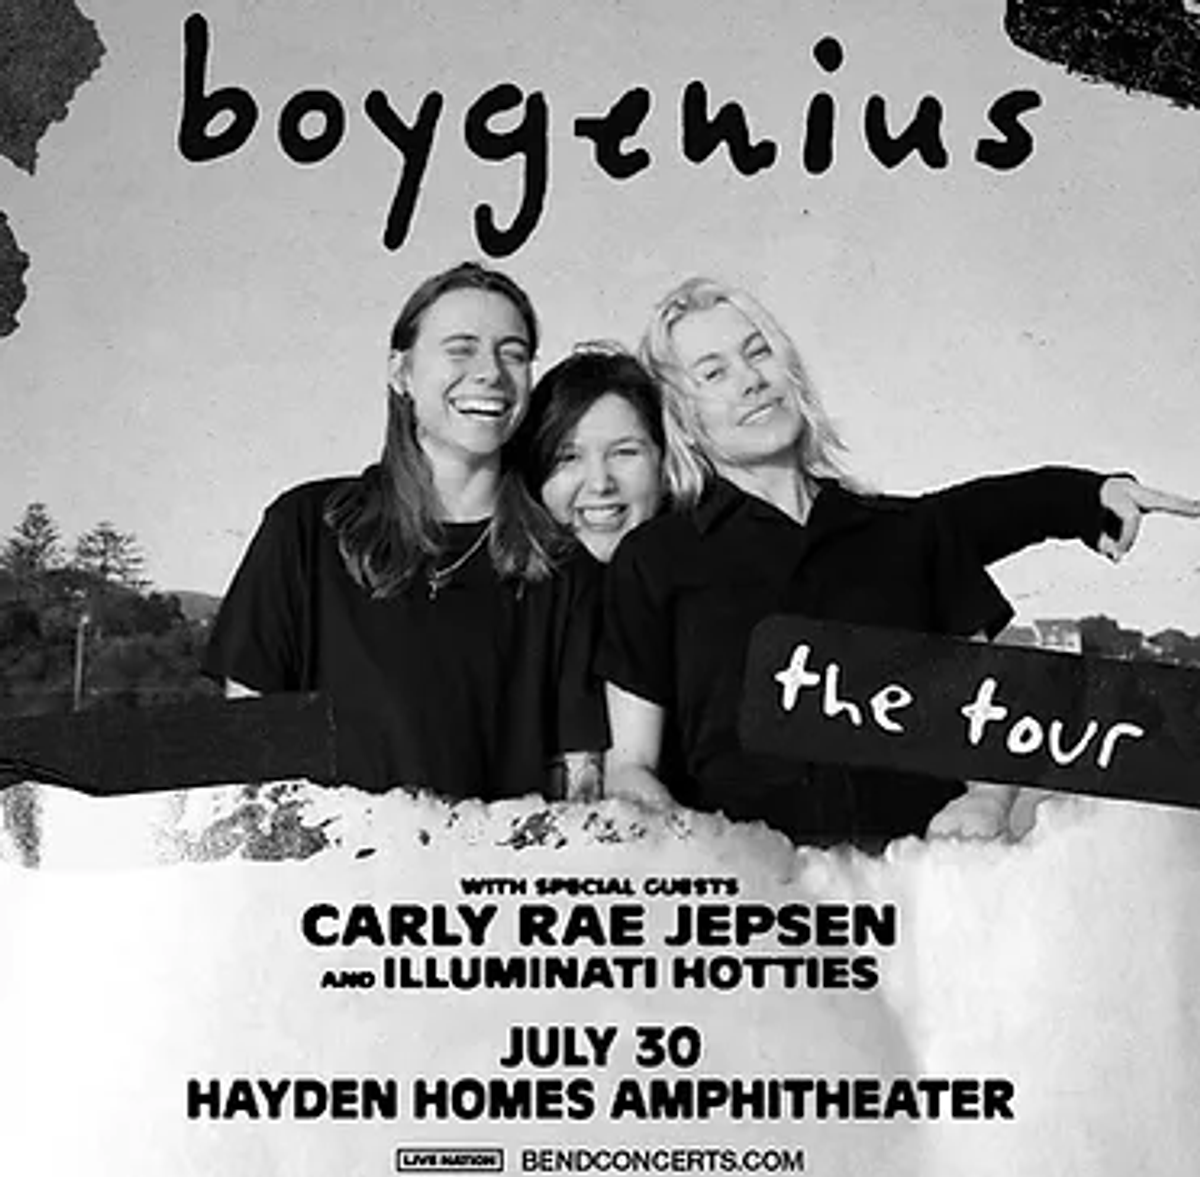 boygenius with Carly Rae Jepsen and Illuminati Hotties at Hayden Homes